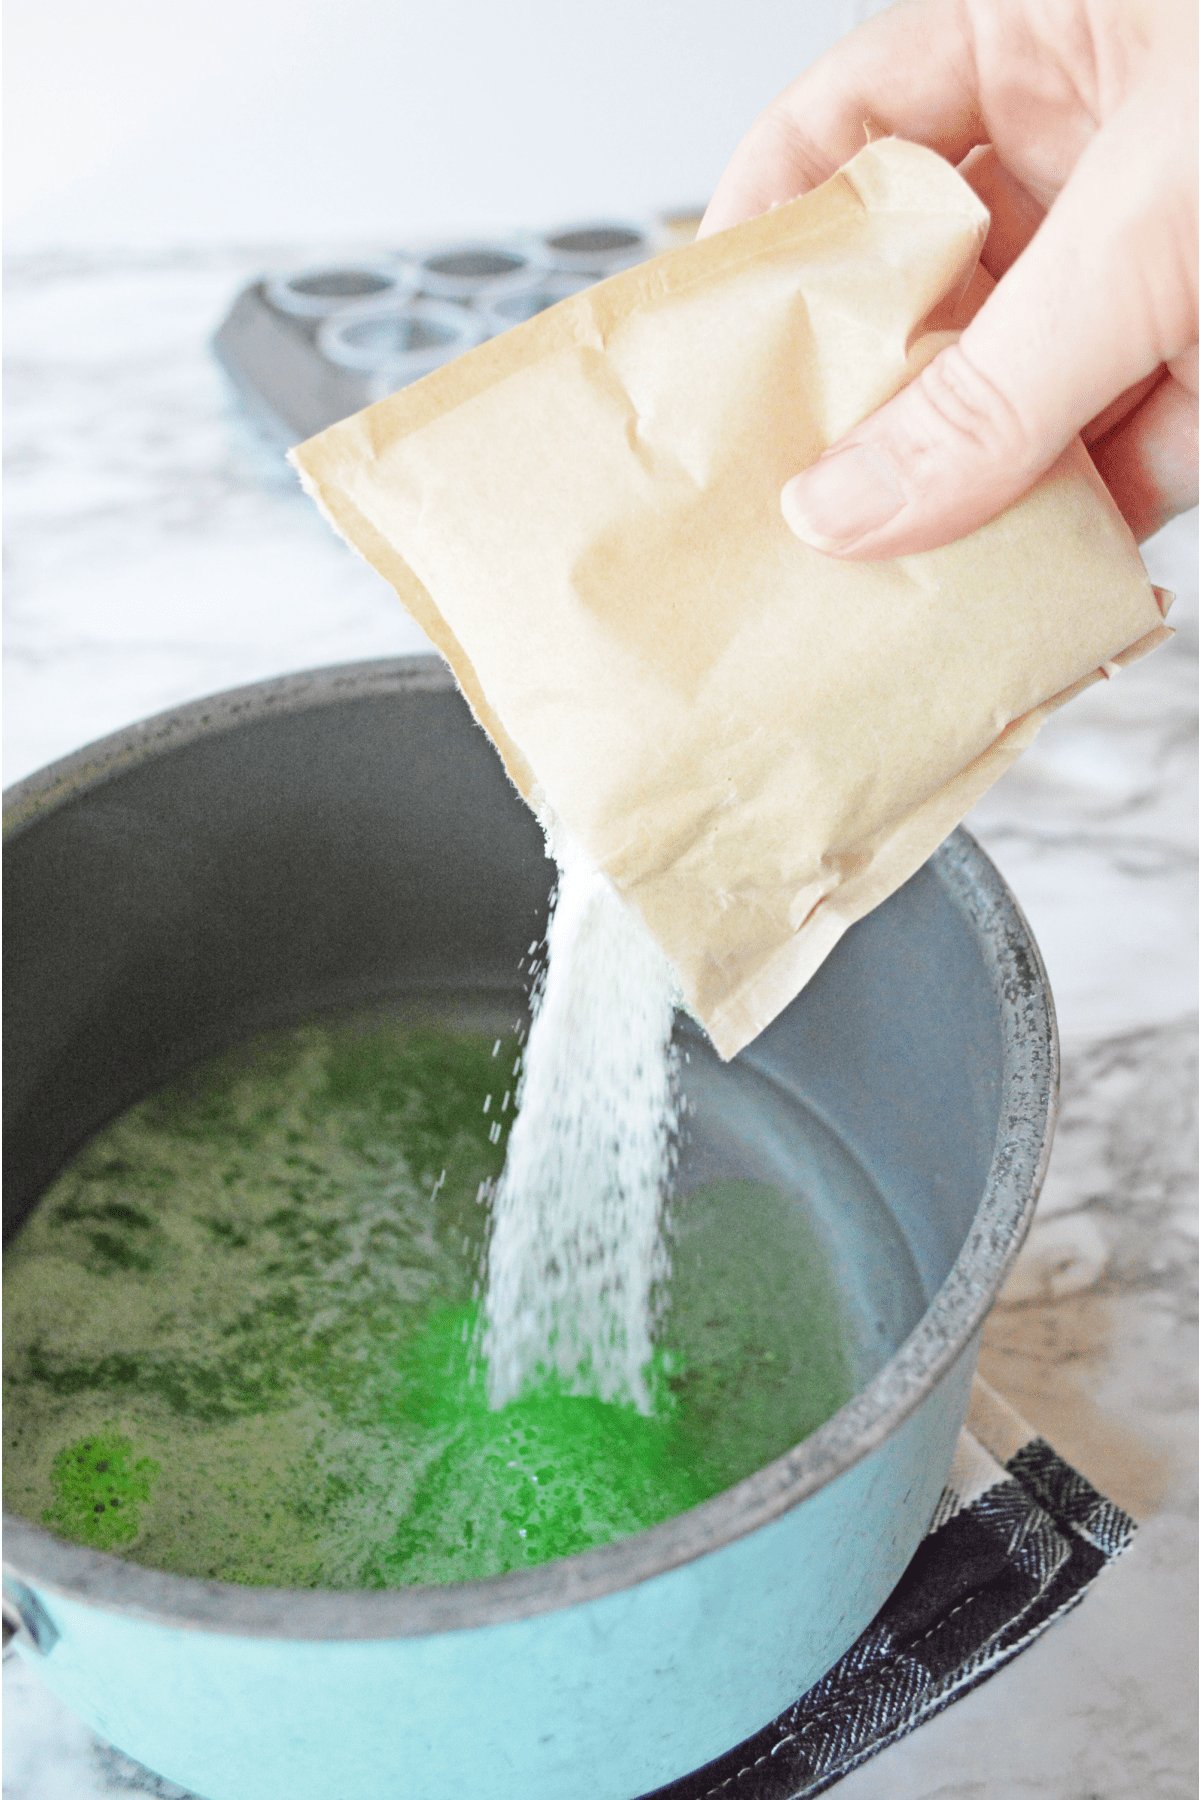 Pouring jello powder into saucepan